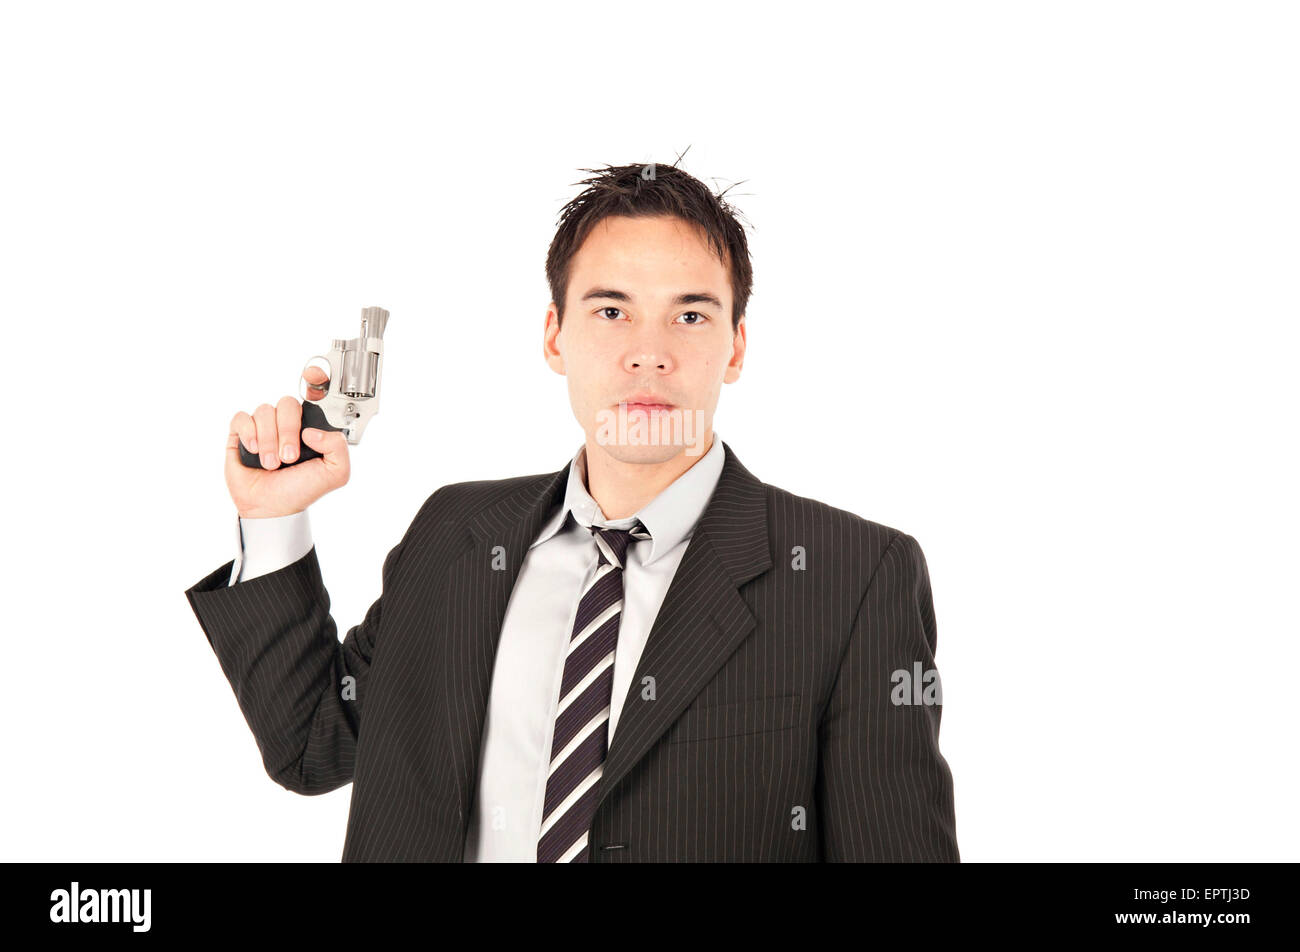 Man pointing a gun in the air Stock Photo